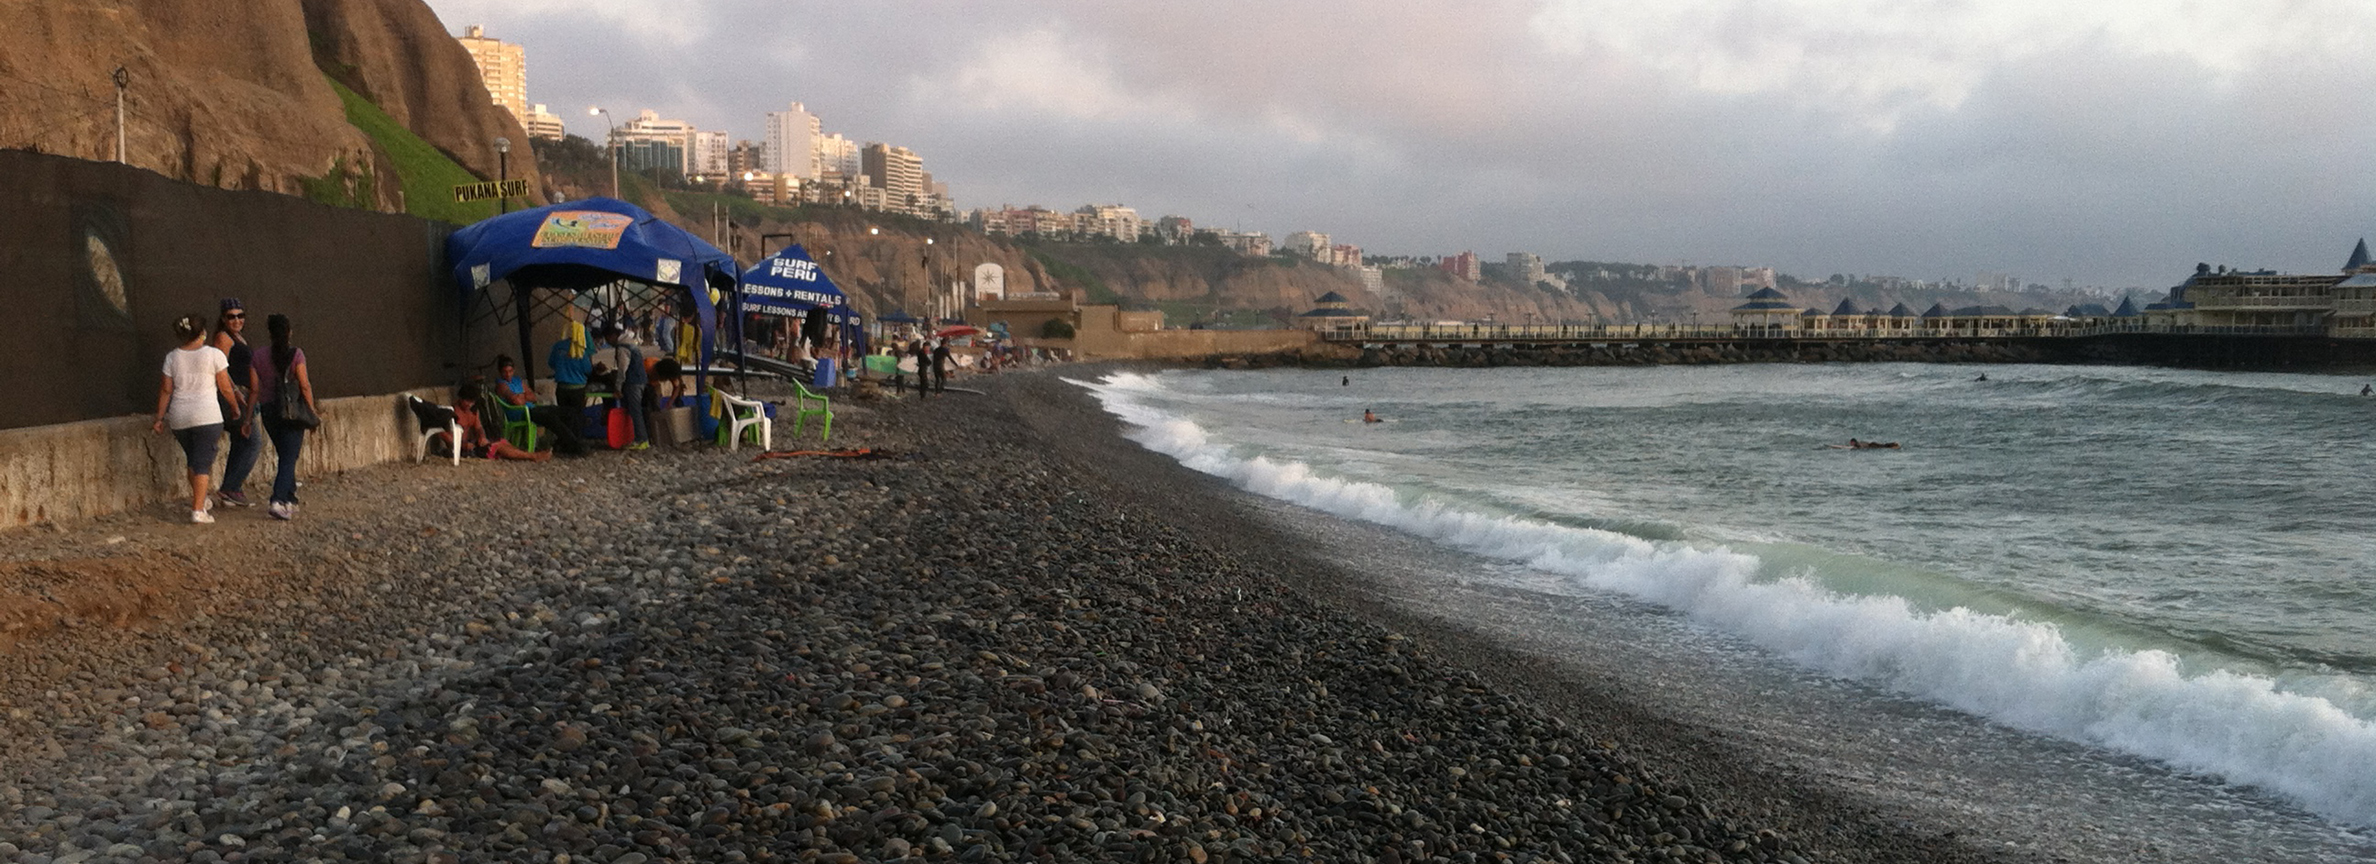 Vulnerable Urban Coastline of Lima, Peru